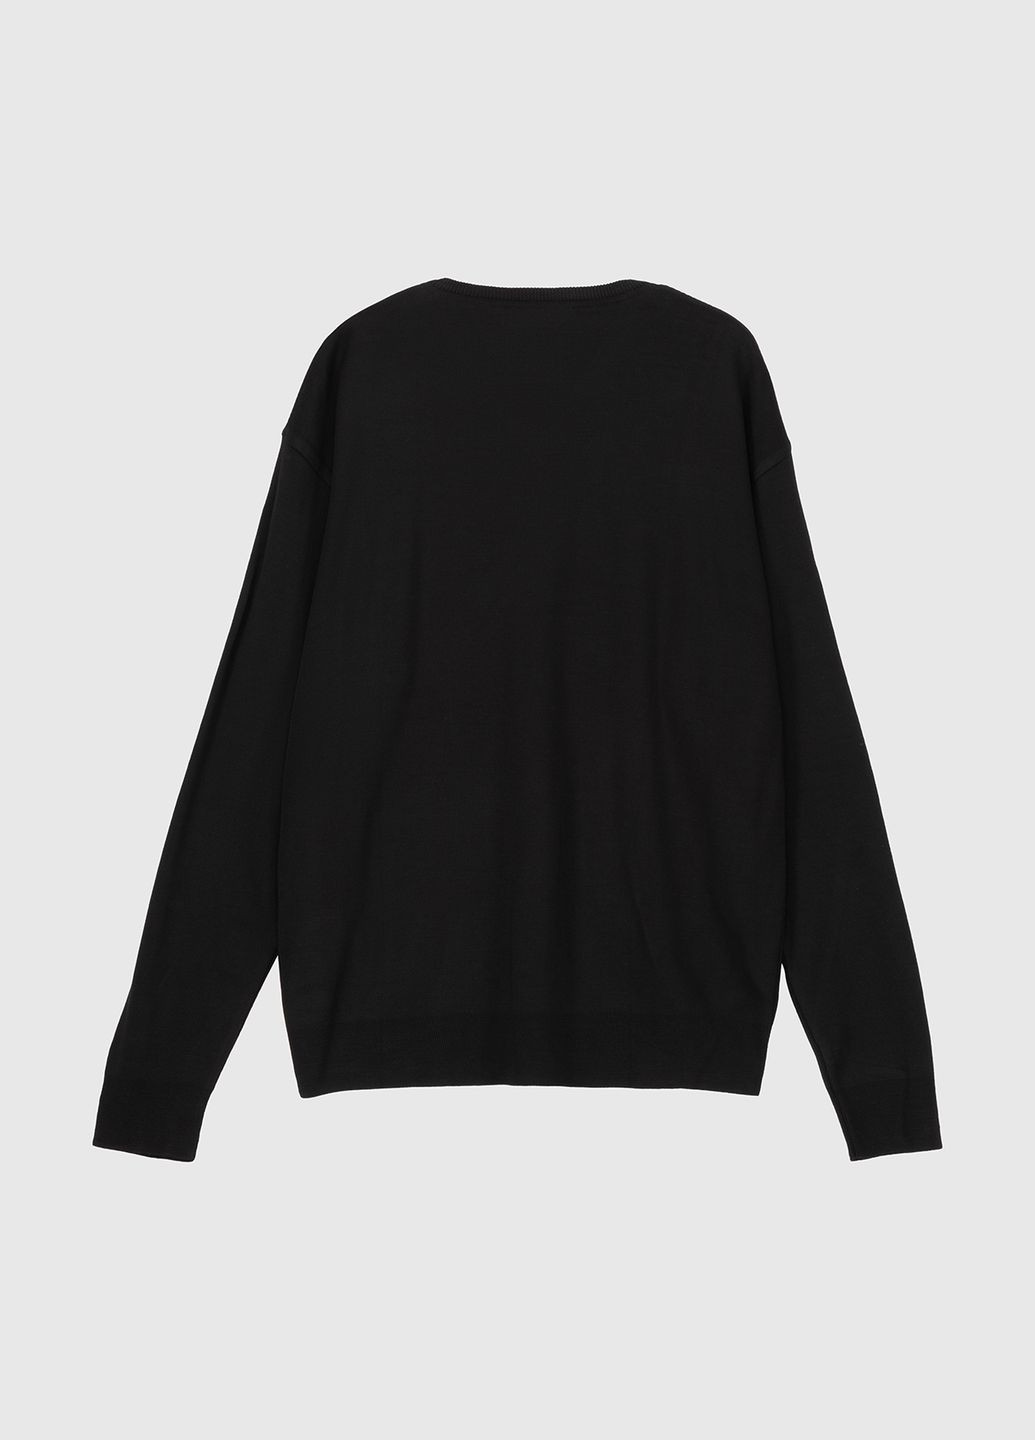 Черный демисезонный пуловер пуловер Akin Trico